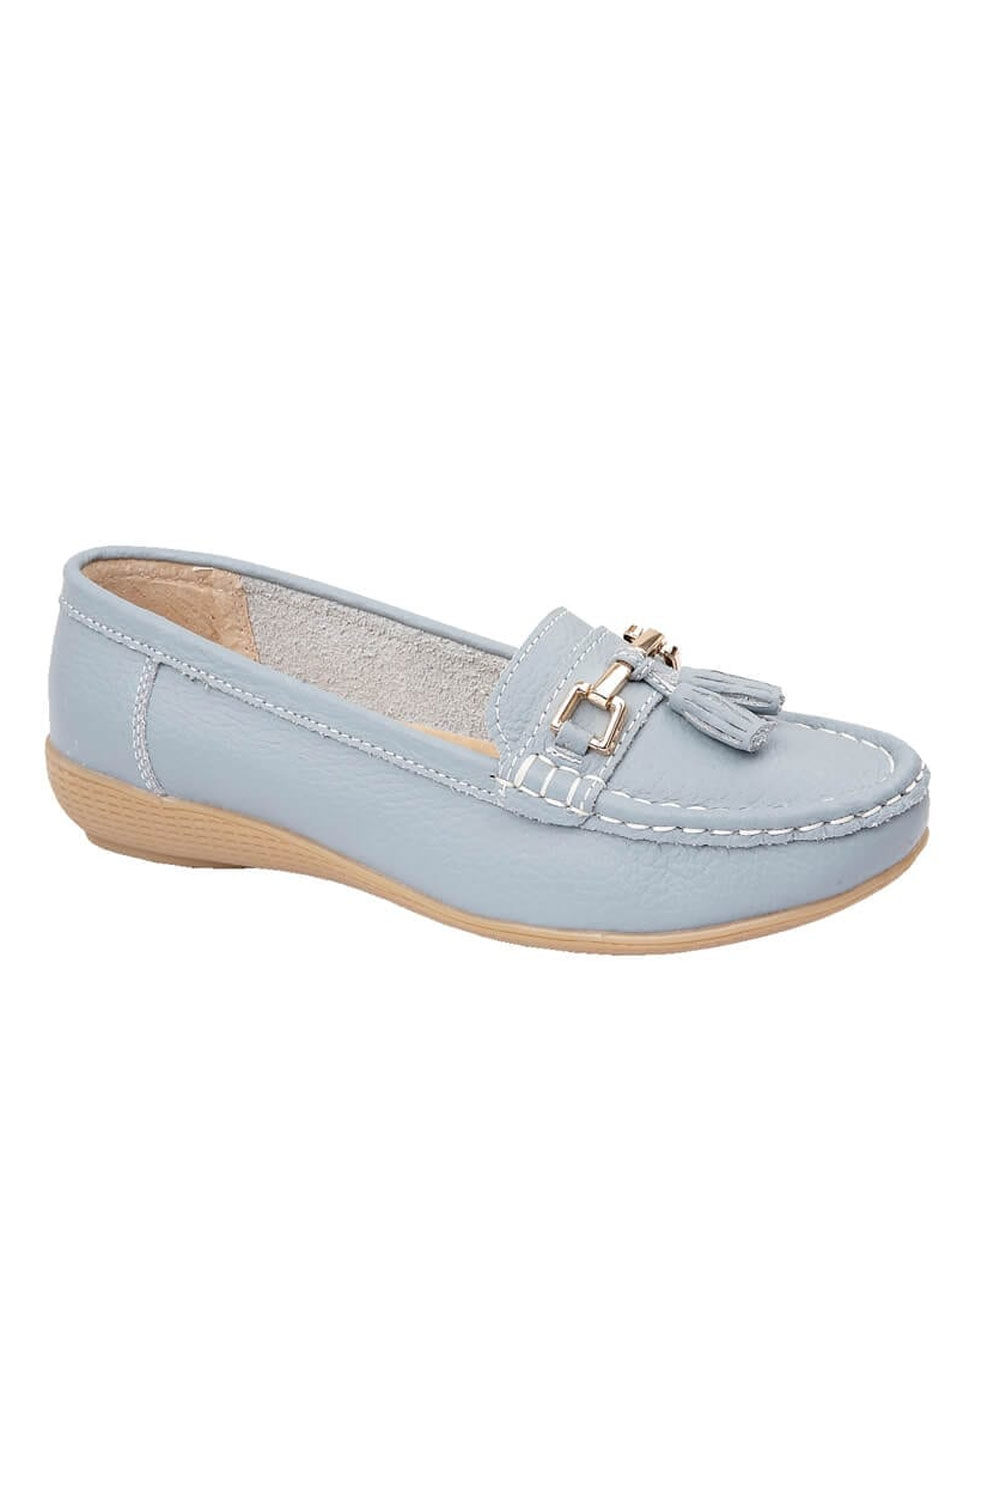 Bonmarche Pale Blue Moccasin Shoes With Tassel Detail, Size: 4